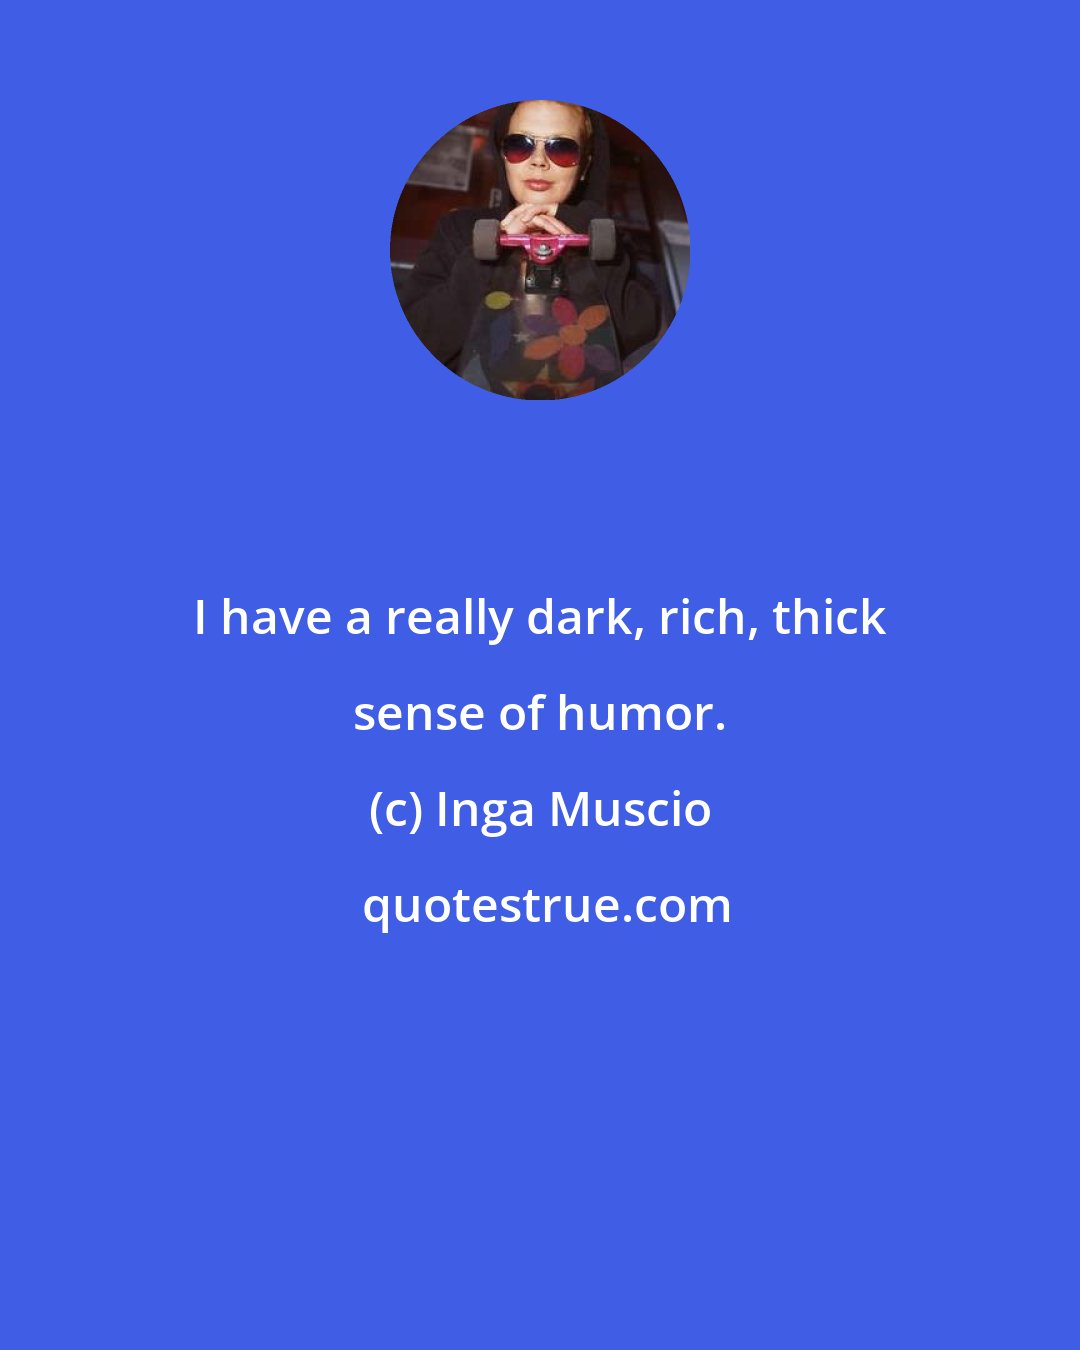 Inga Muscio: I have a really dark, rich, thick sense of humor.